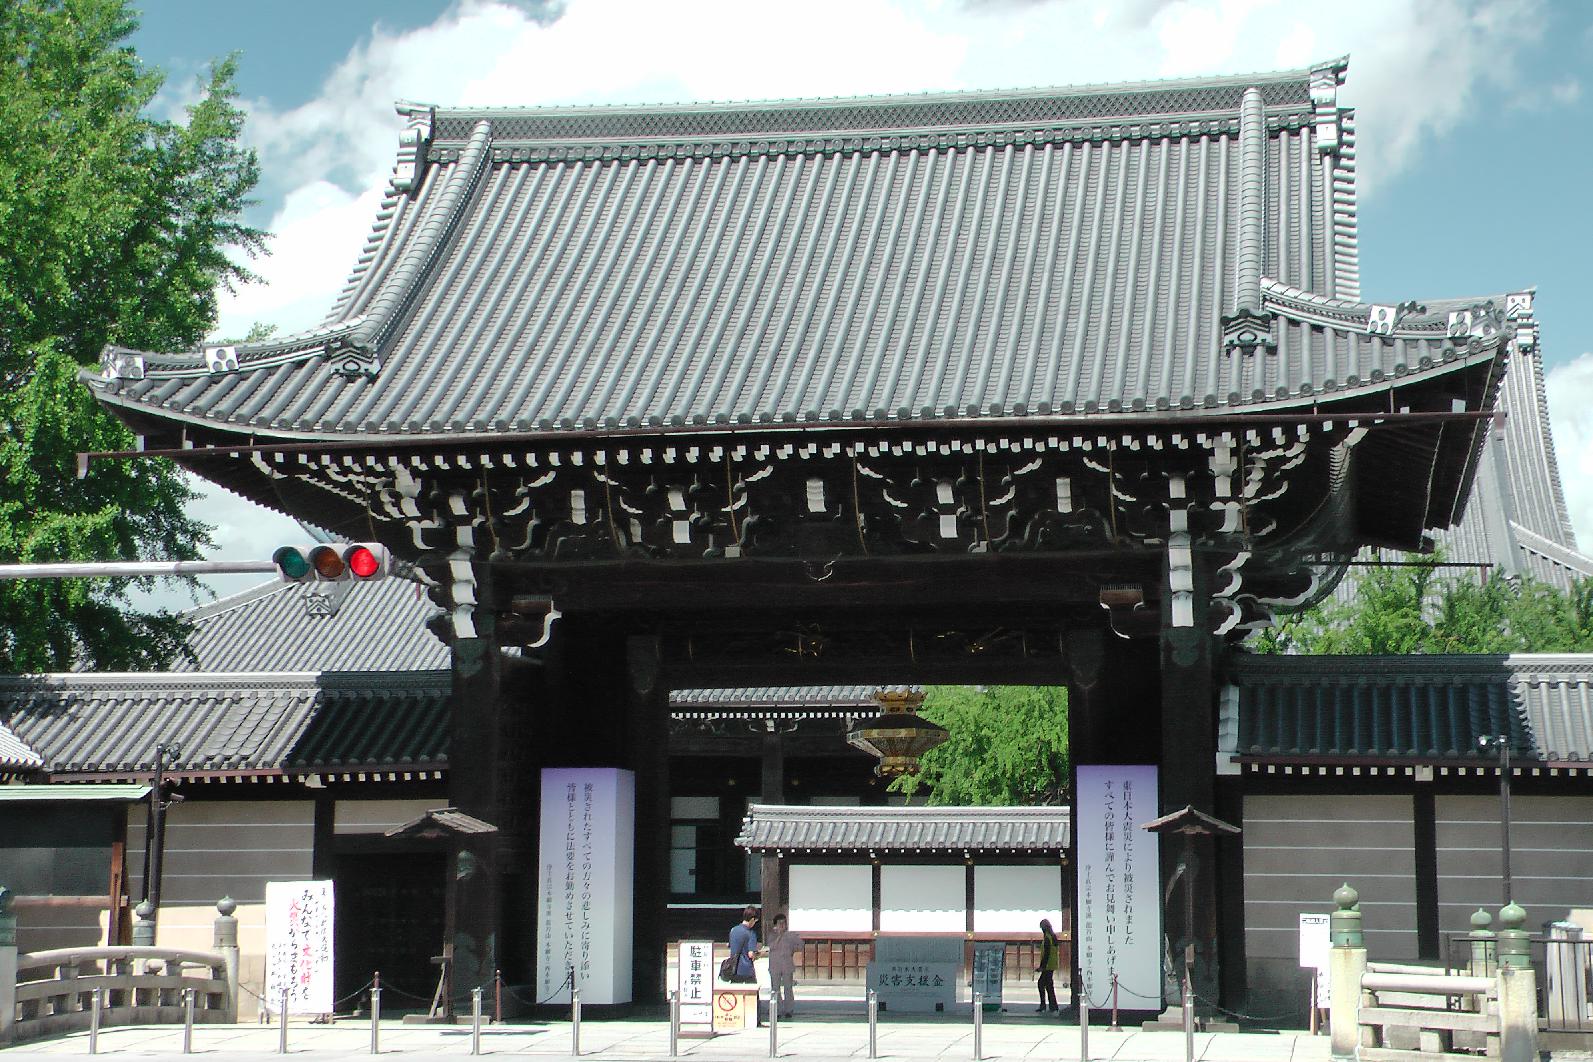 Another entrance to the Nishi Hongan-ji Temple